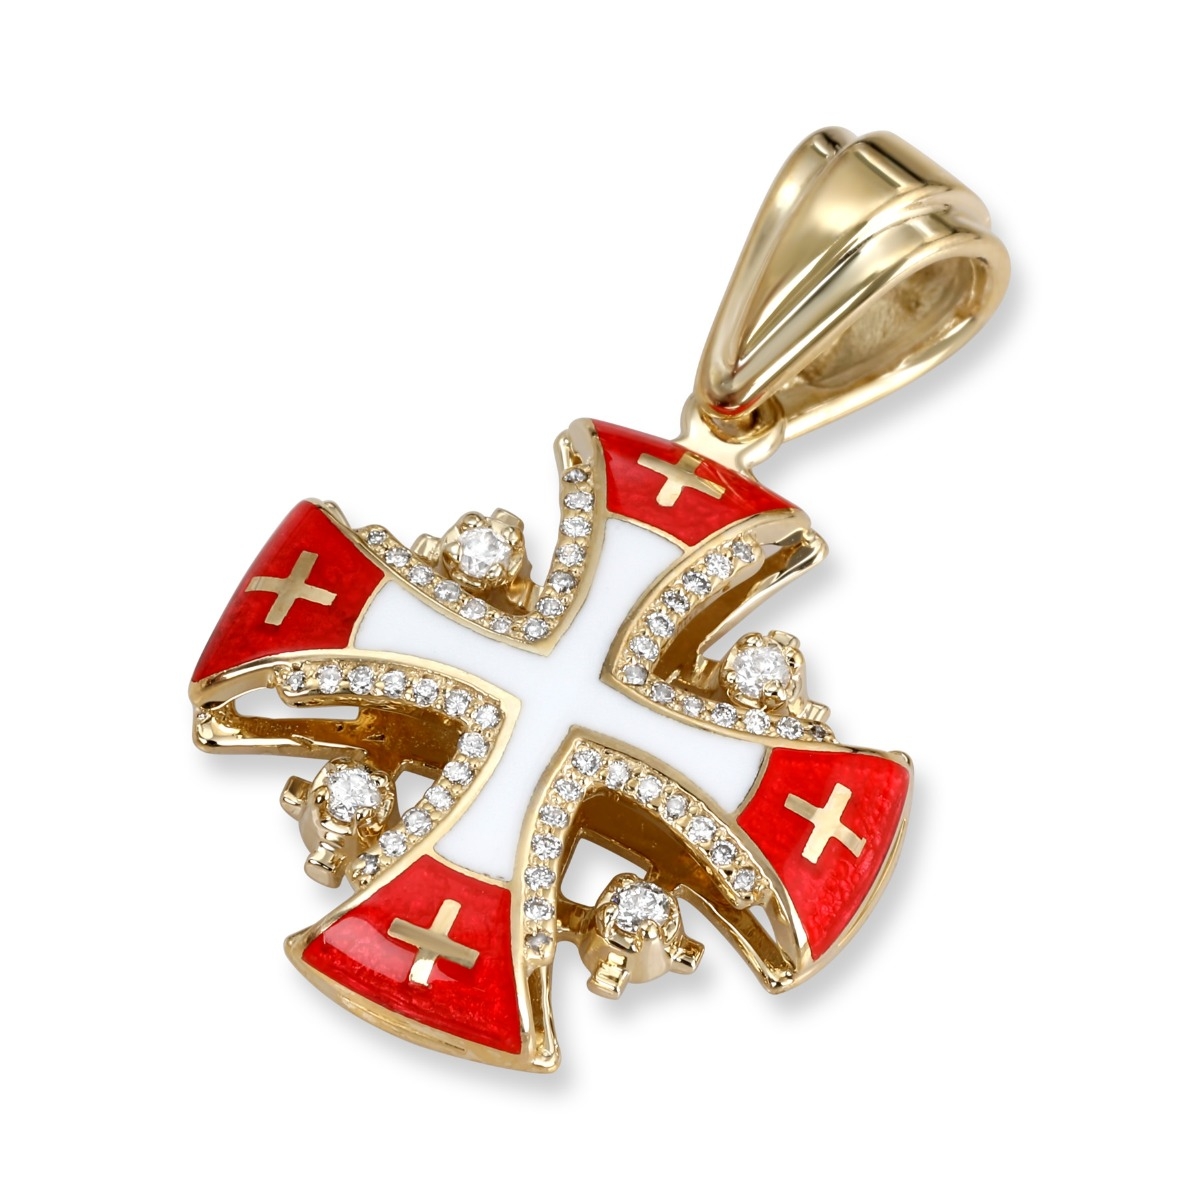 Anbinder Jewelry 14K Yellow Gold and Red & White Enamel Diamond Splayed Jerusalem Cross Pendant with 56 Diamonds - 1